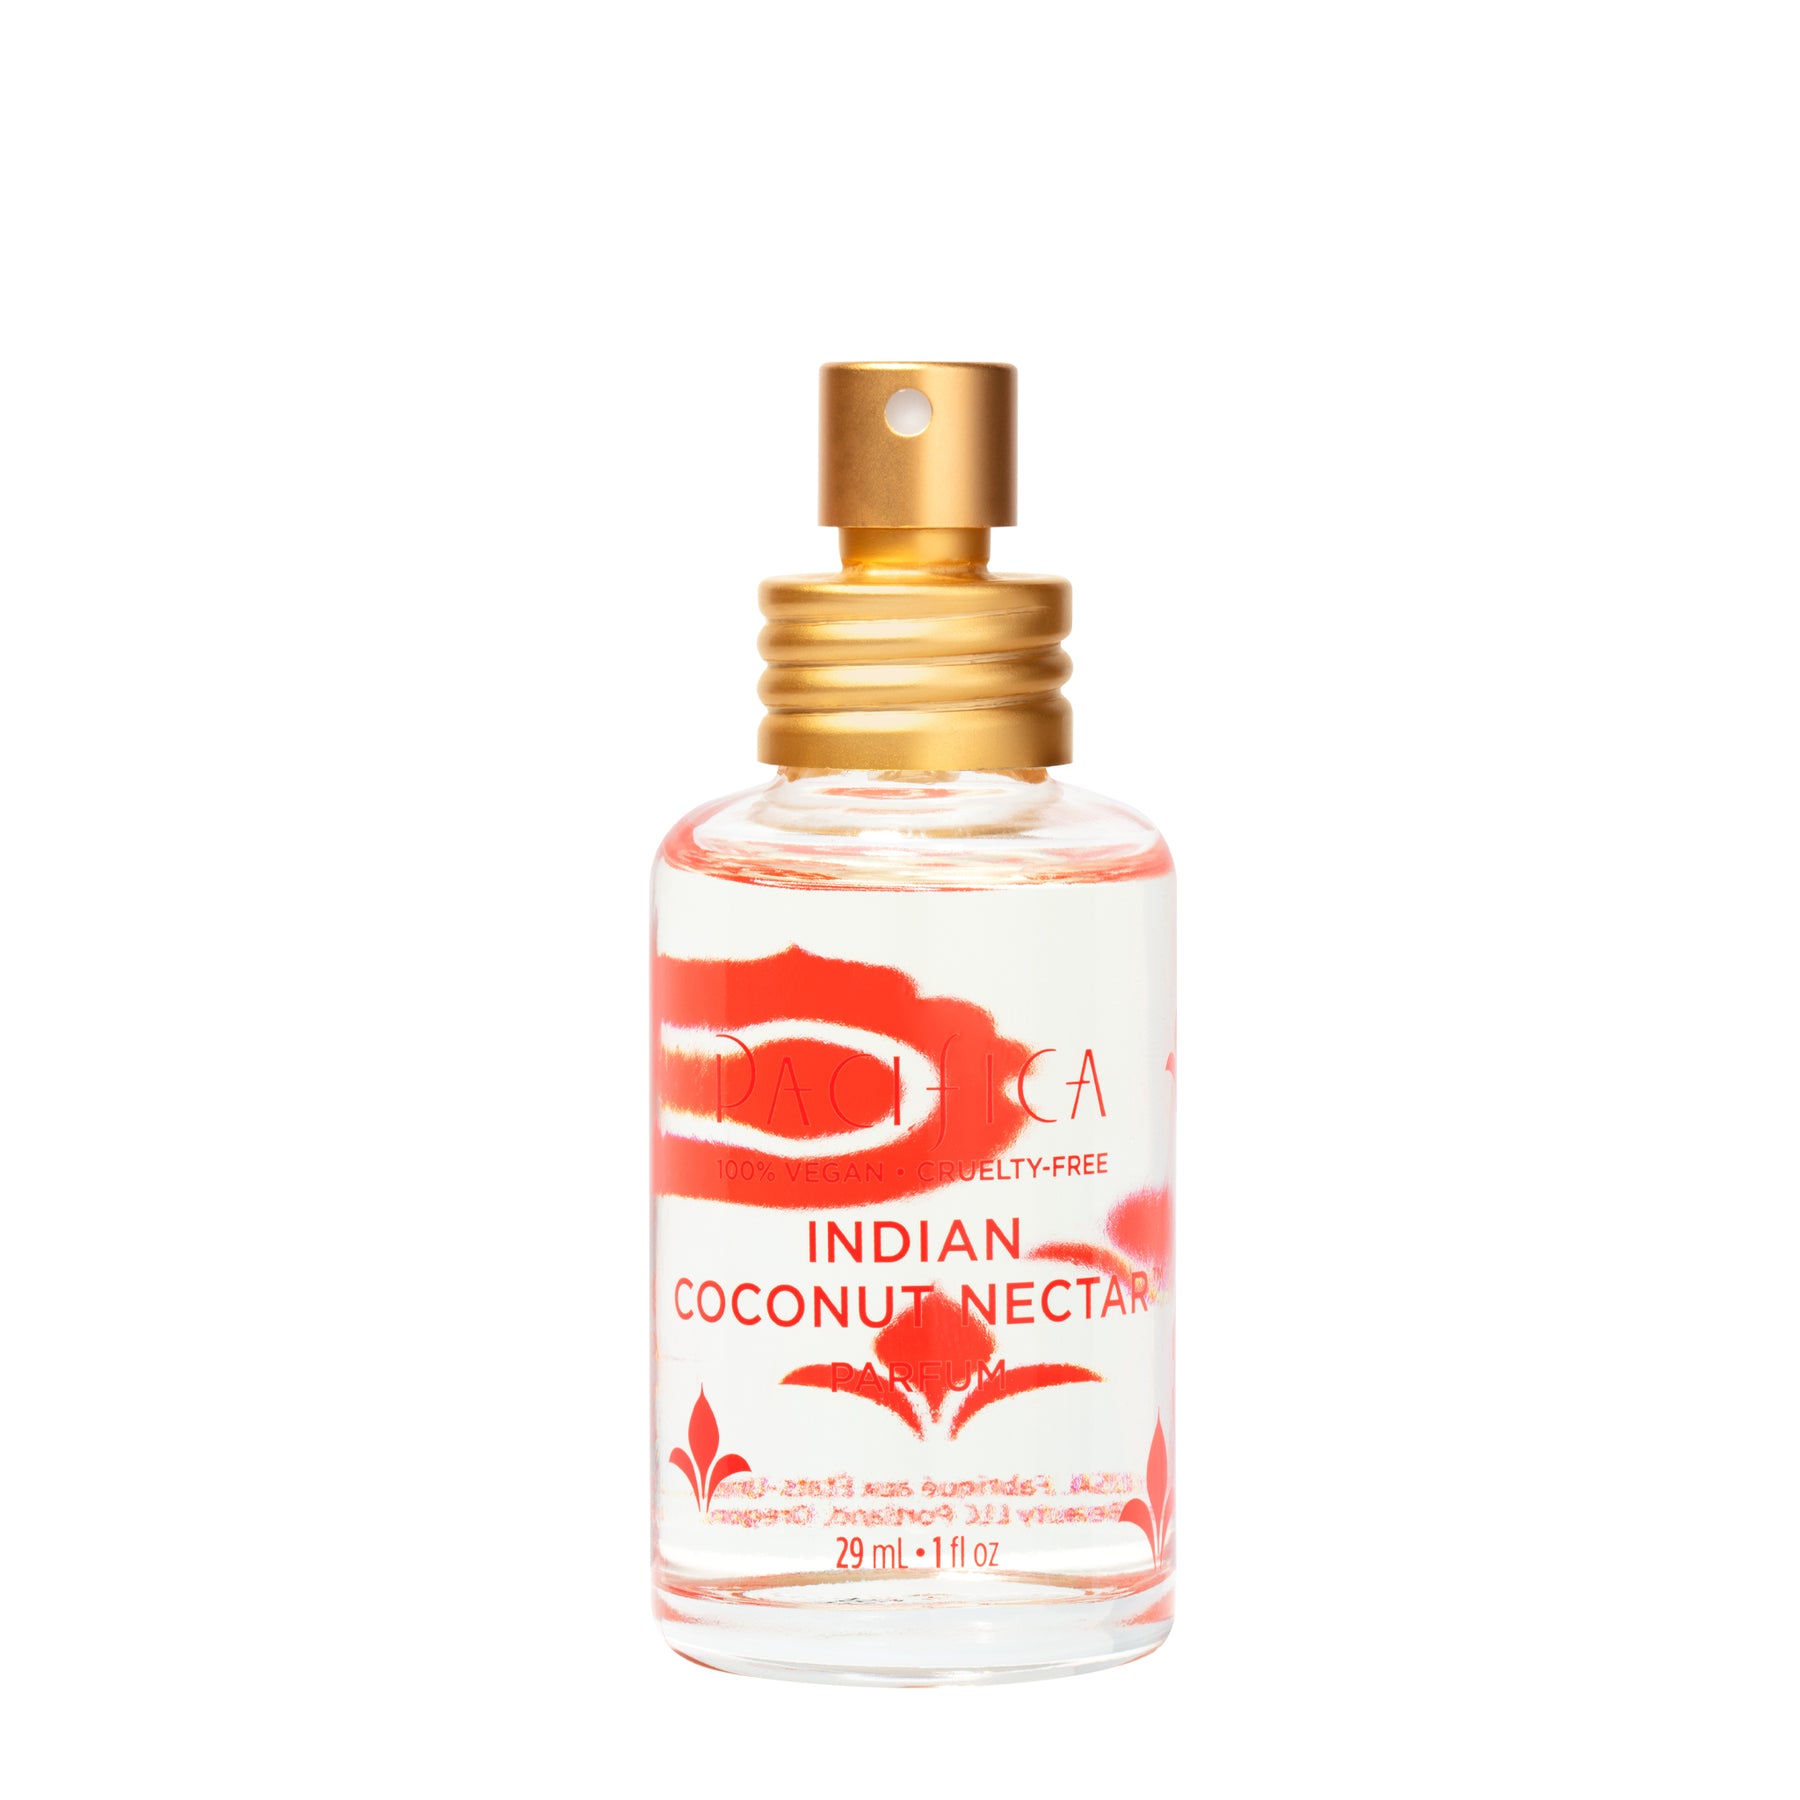 Indian Coconut Nectar Spray Perfume - Perfume - Pacifica Beauty